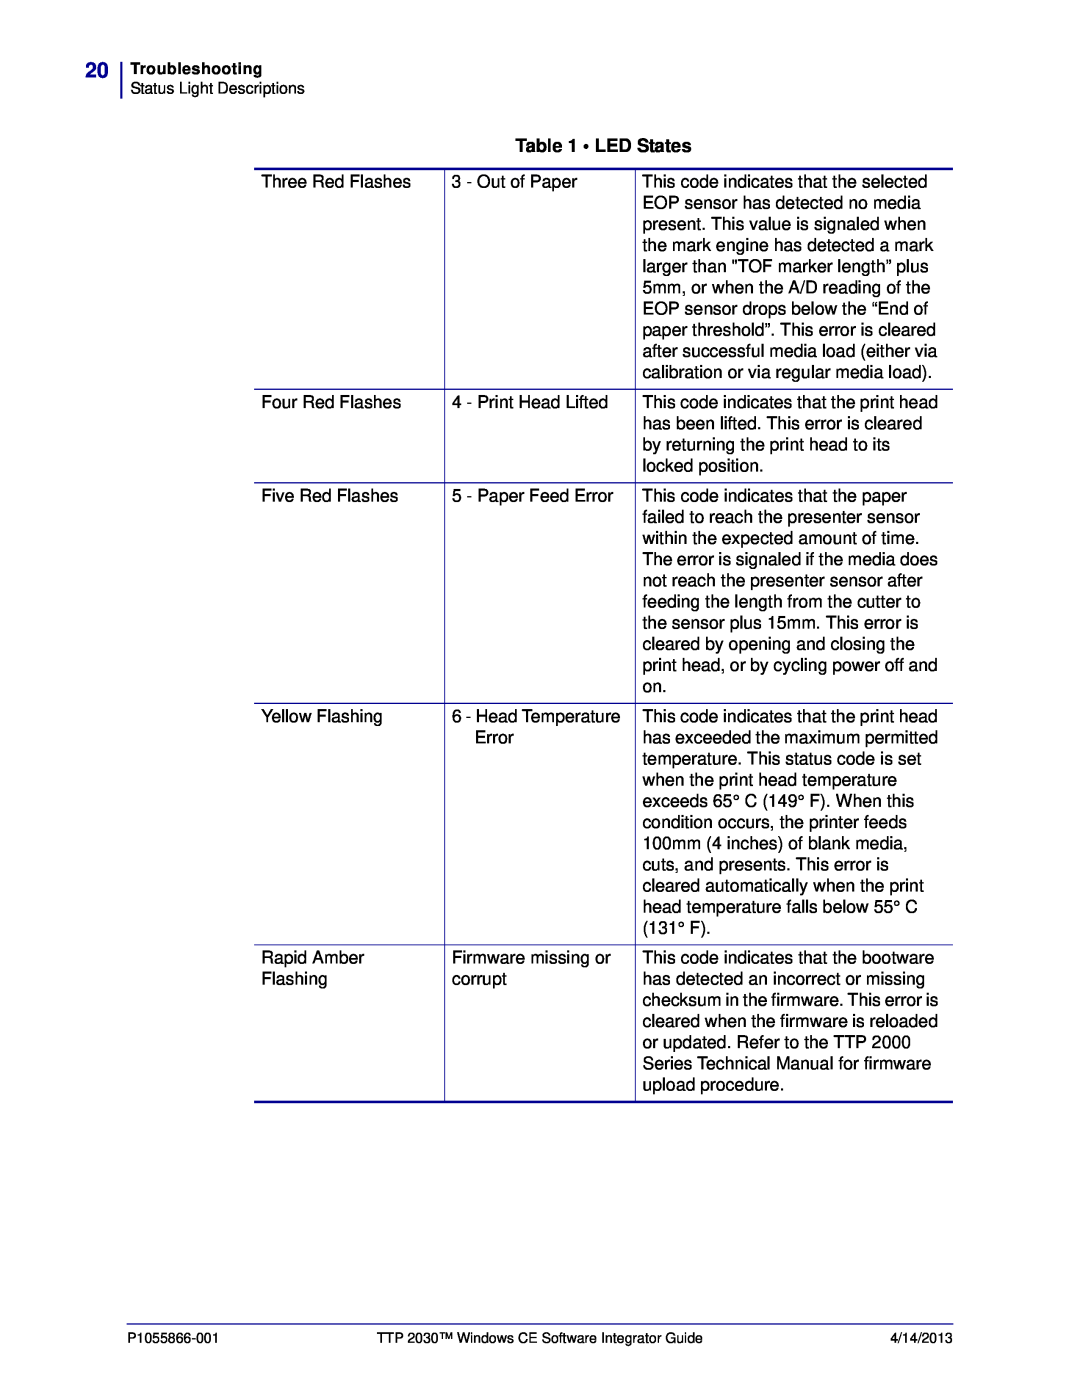 Zebra Technologies TTP 2030 manual LED States, Troubleshooting, Status Light Descriptions 